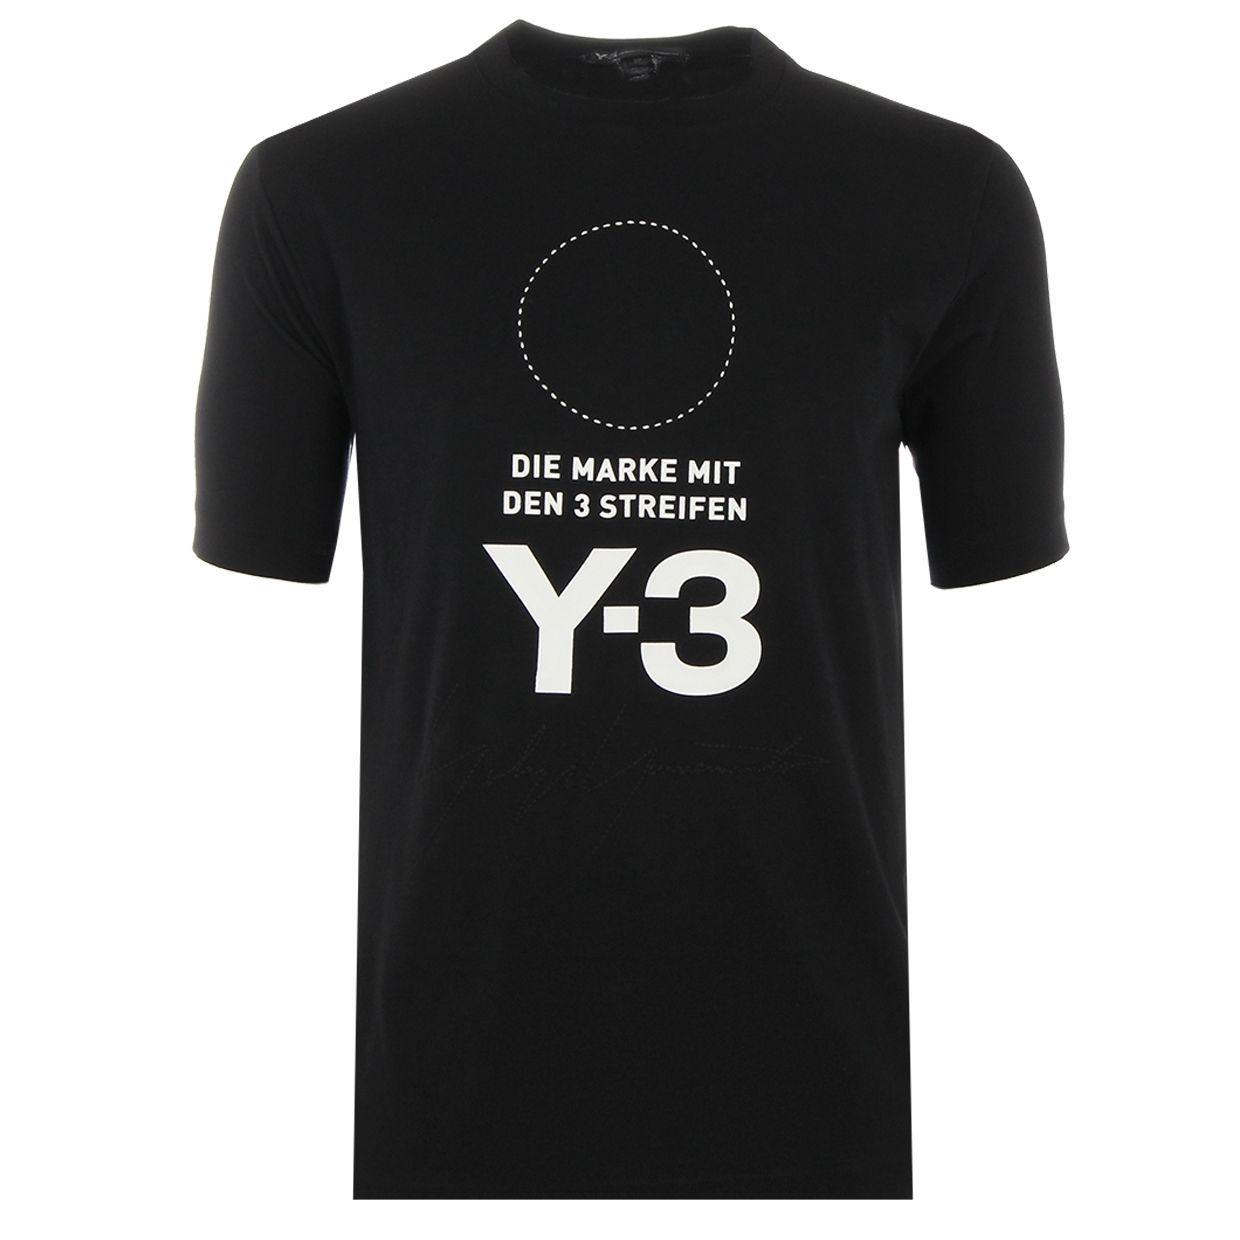 Y-3 Logo - Y-3 Die Marke Mit Black T-Shirt